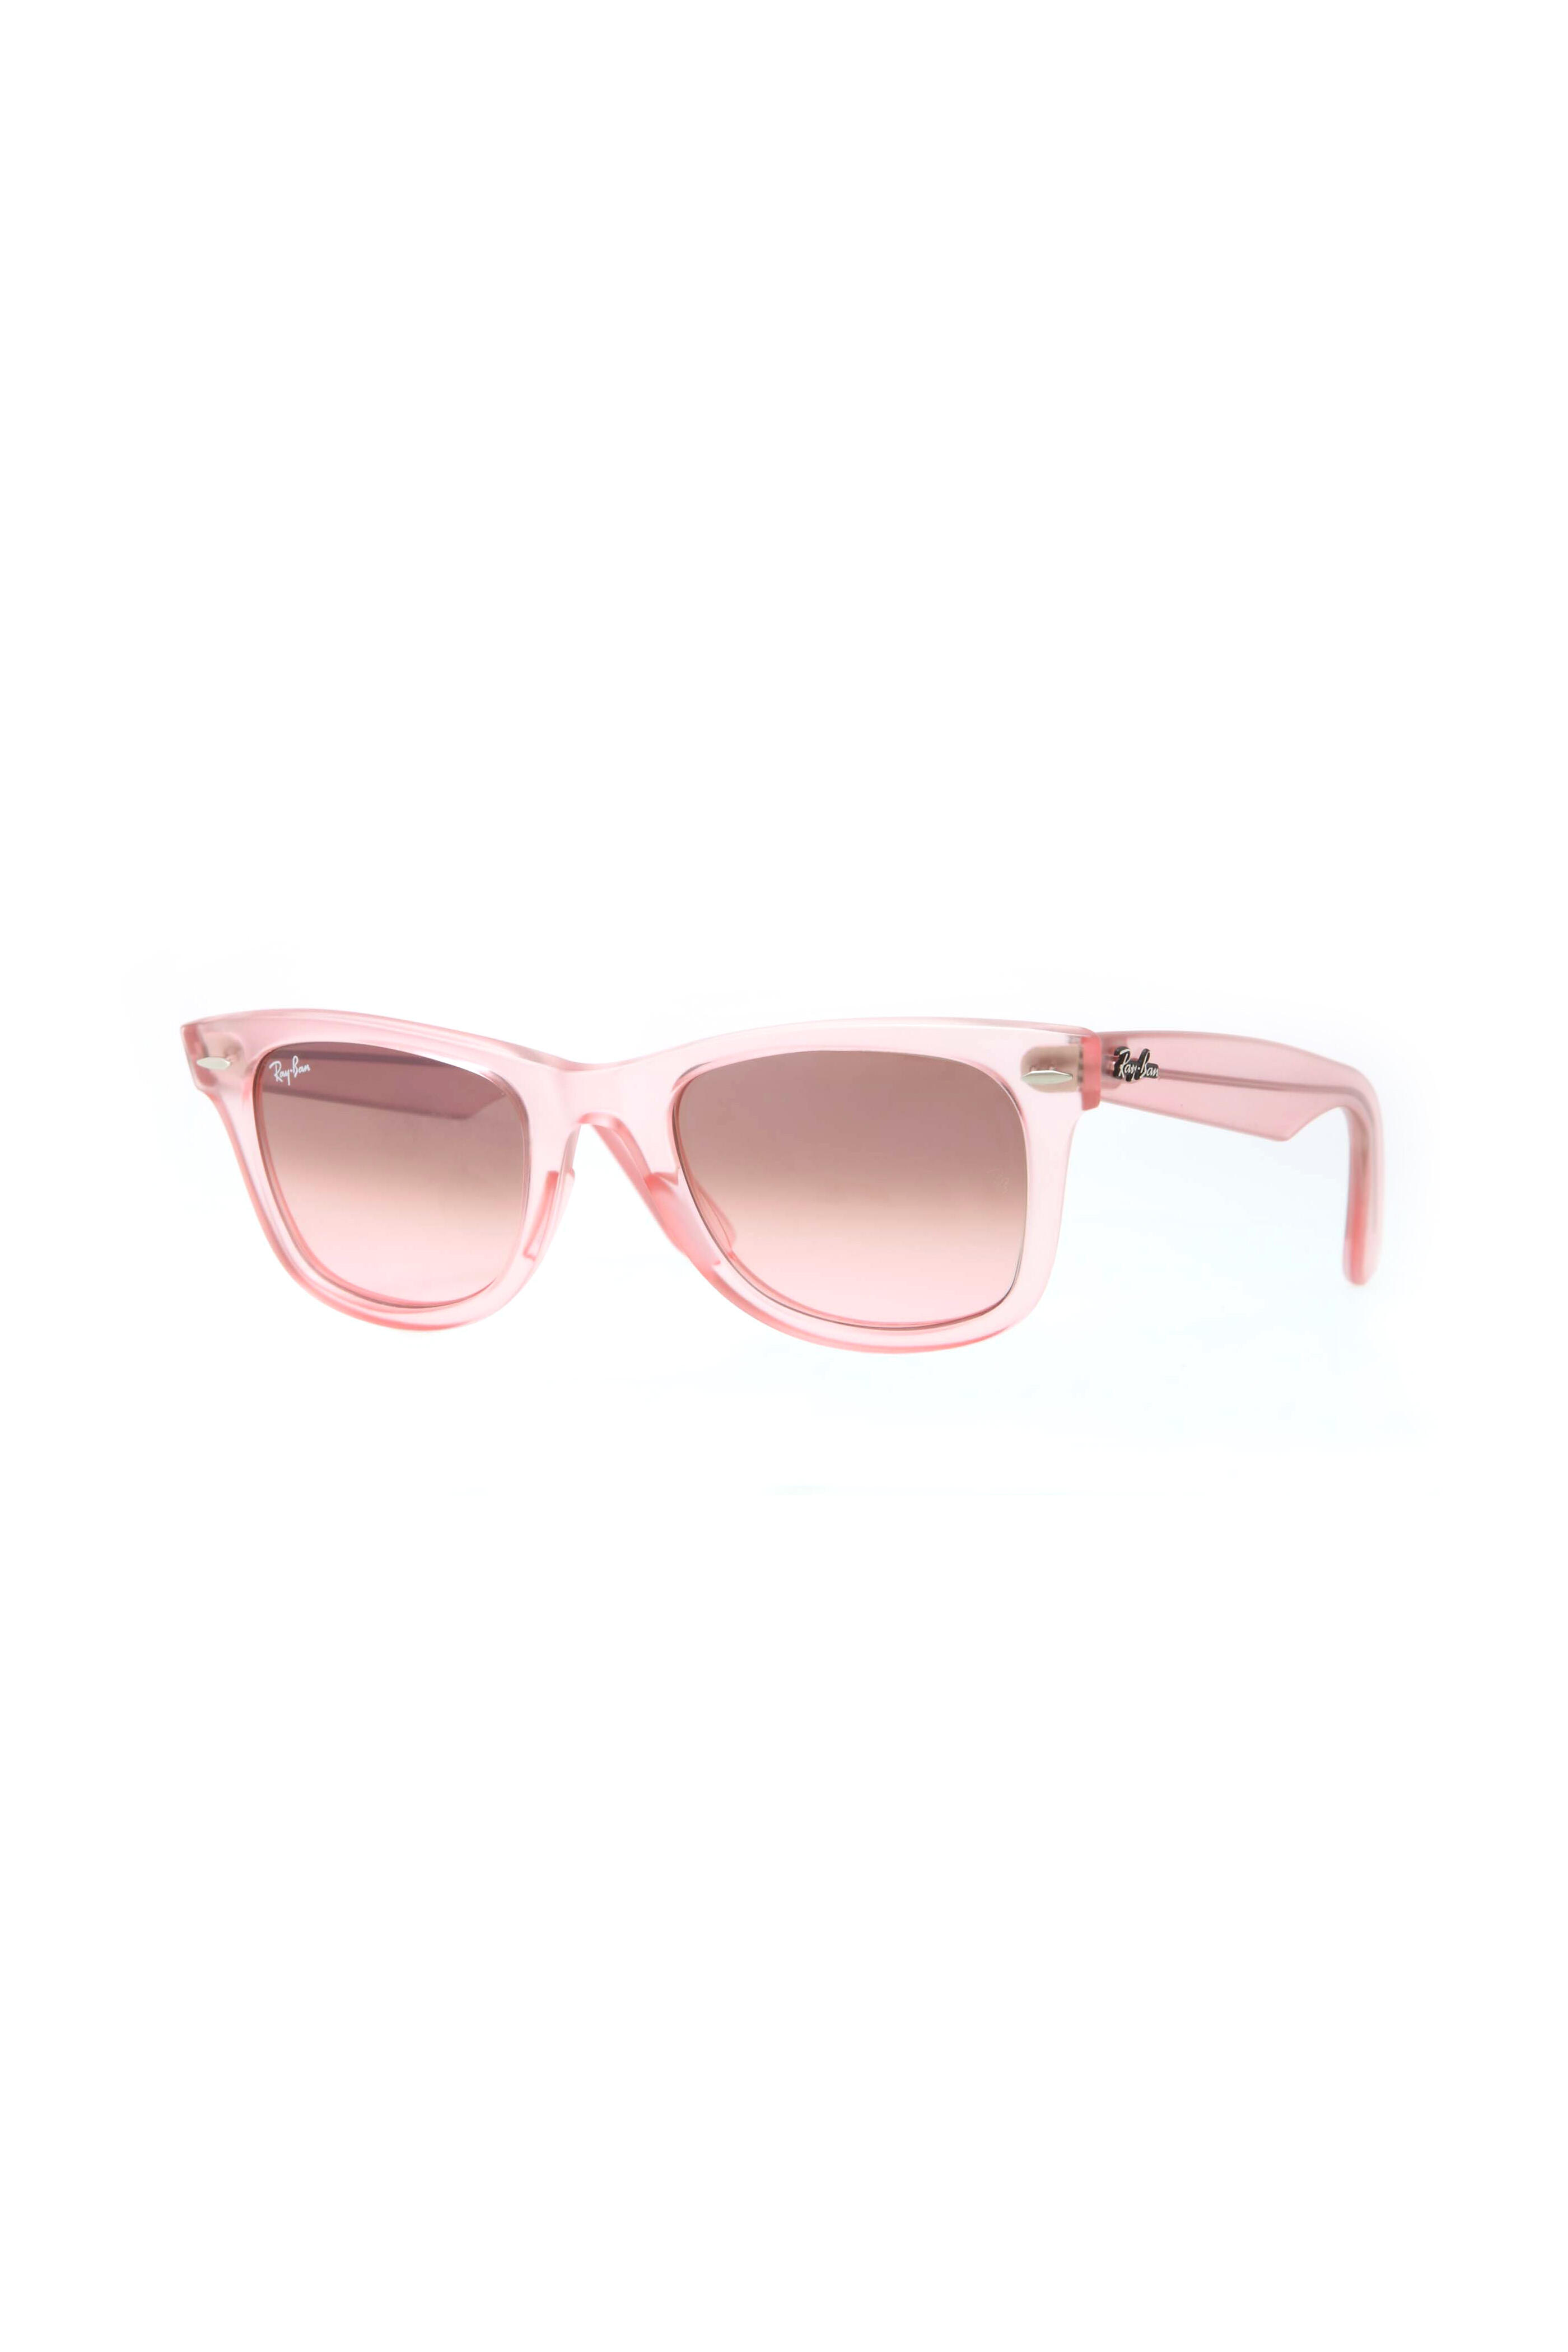 Ray Ban - Original Wayfarer Ice Pop Pink Sunglasses